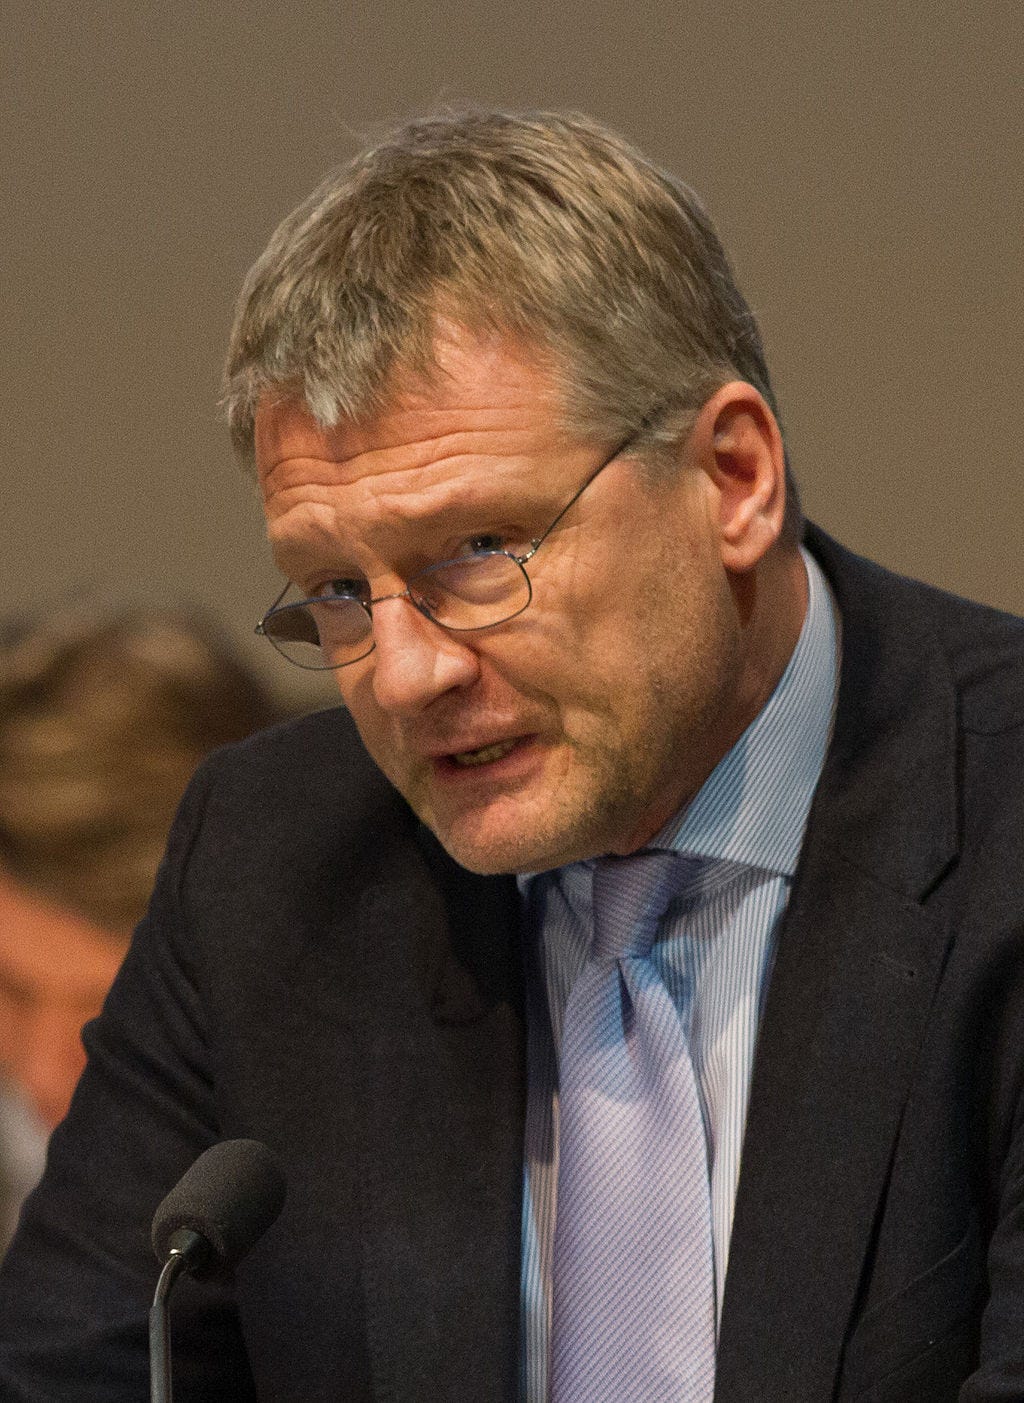 Jörg Meuthen, Head of the Afd - bigger than you think? © Robin Krahl